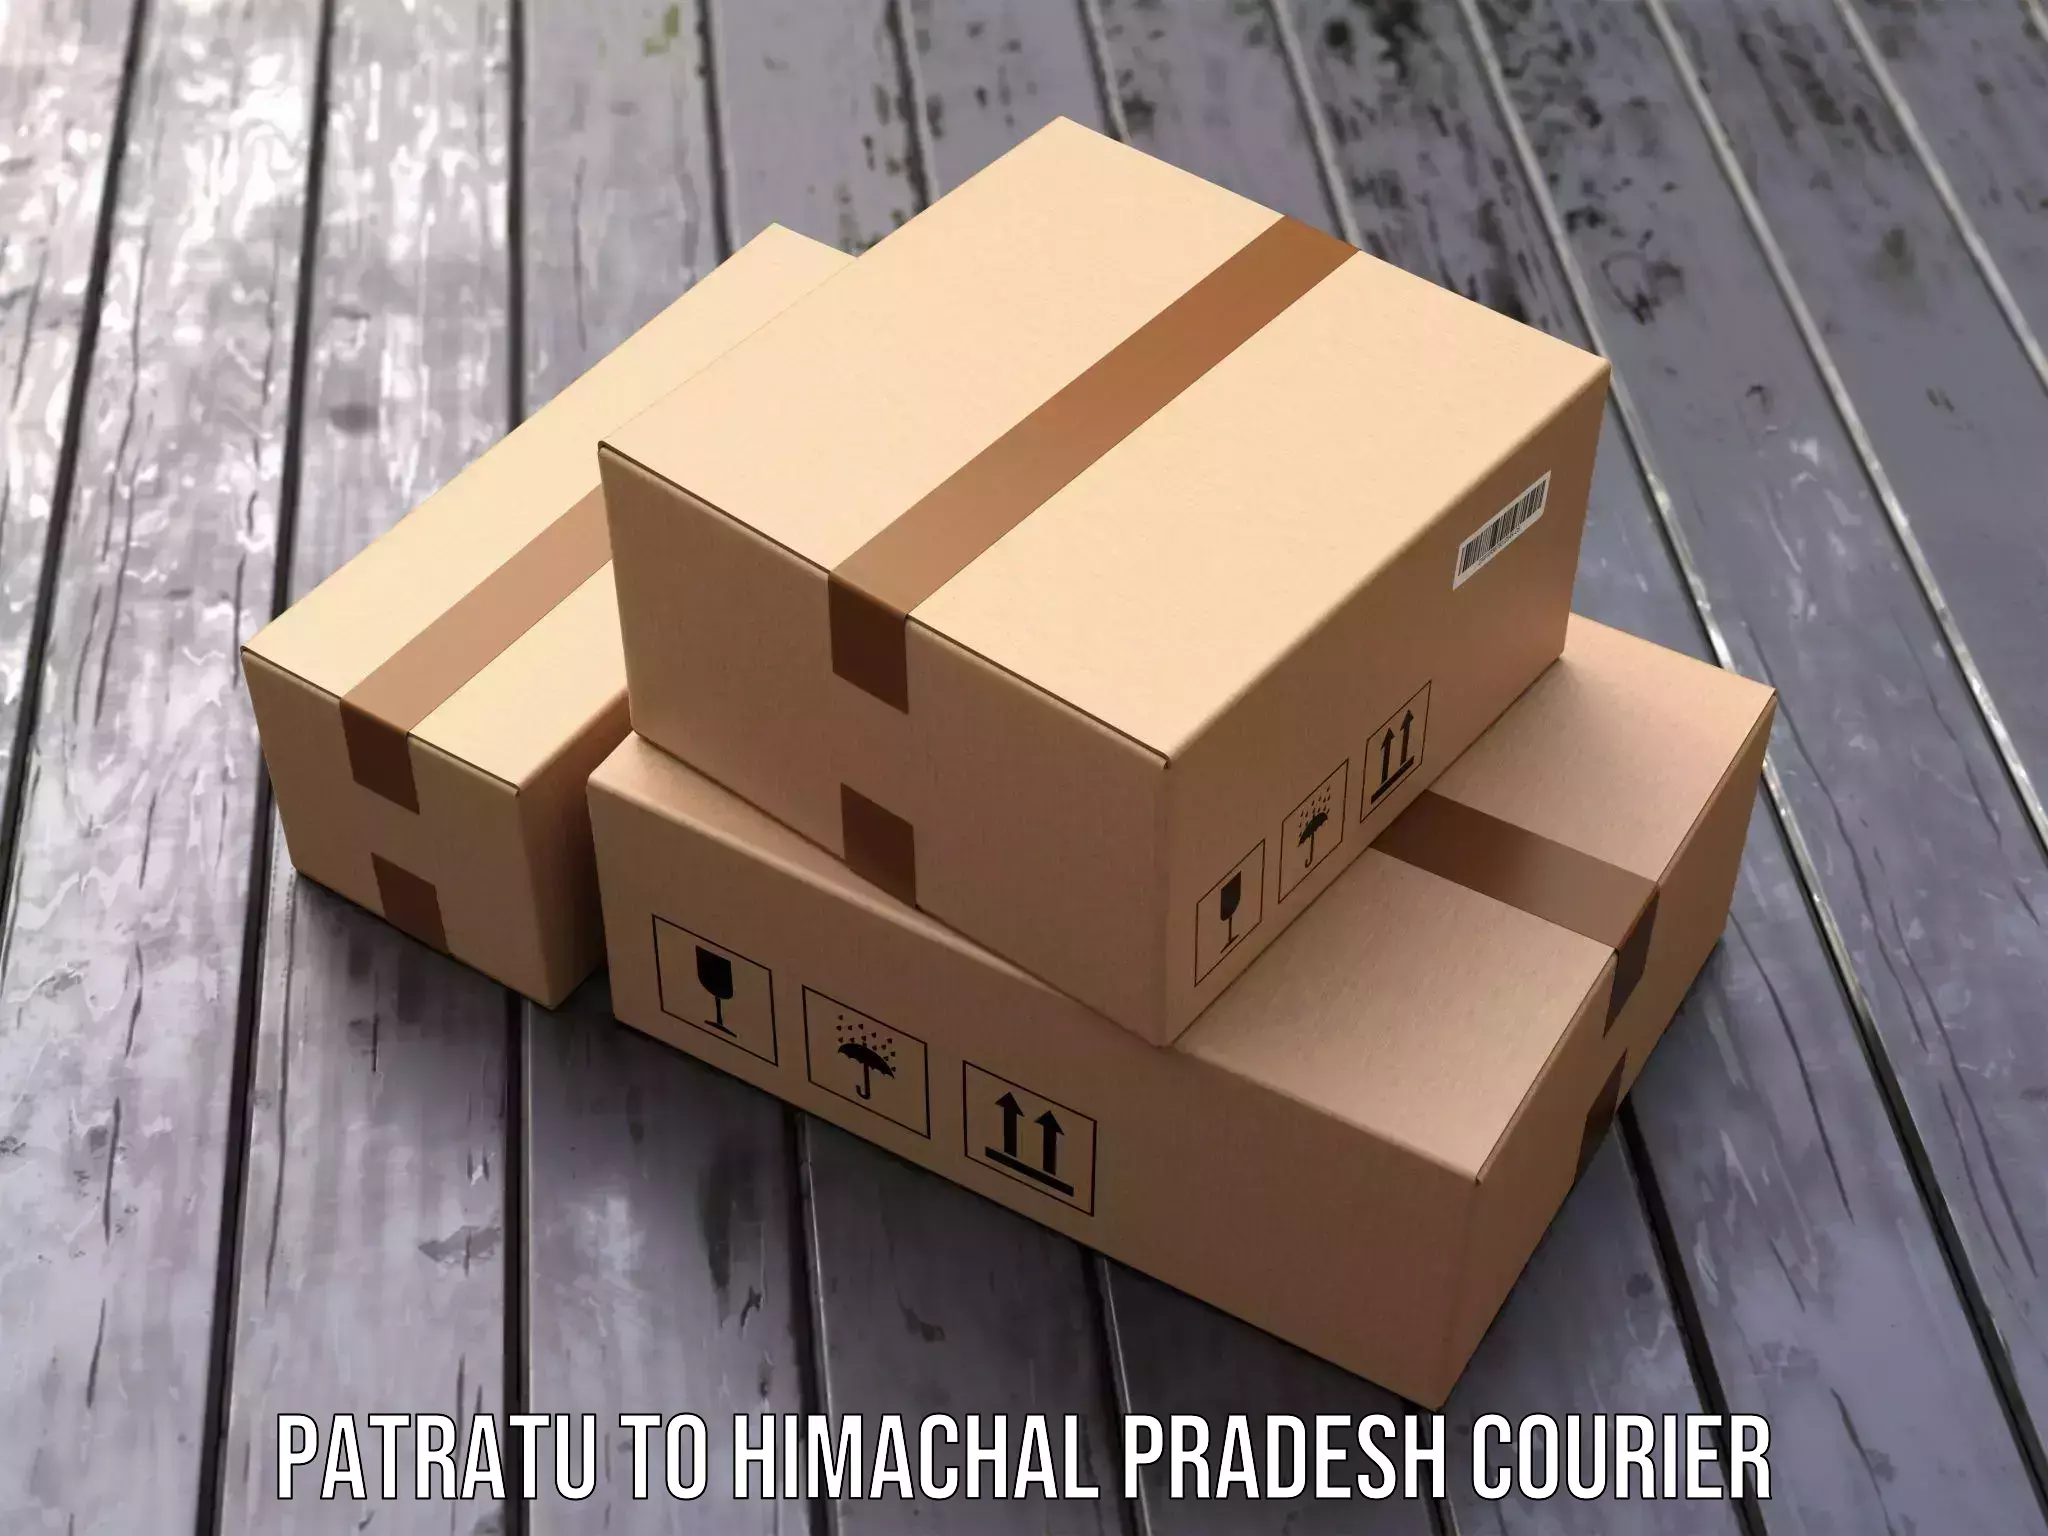 Pharmaceutical courier Patratu to Sundar Nagar